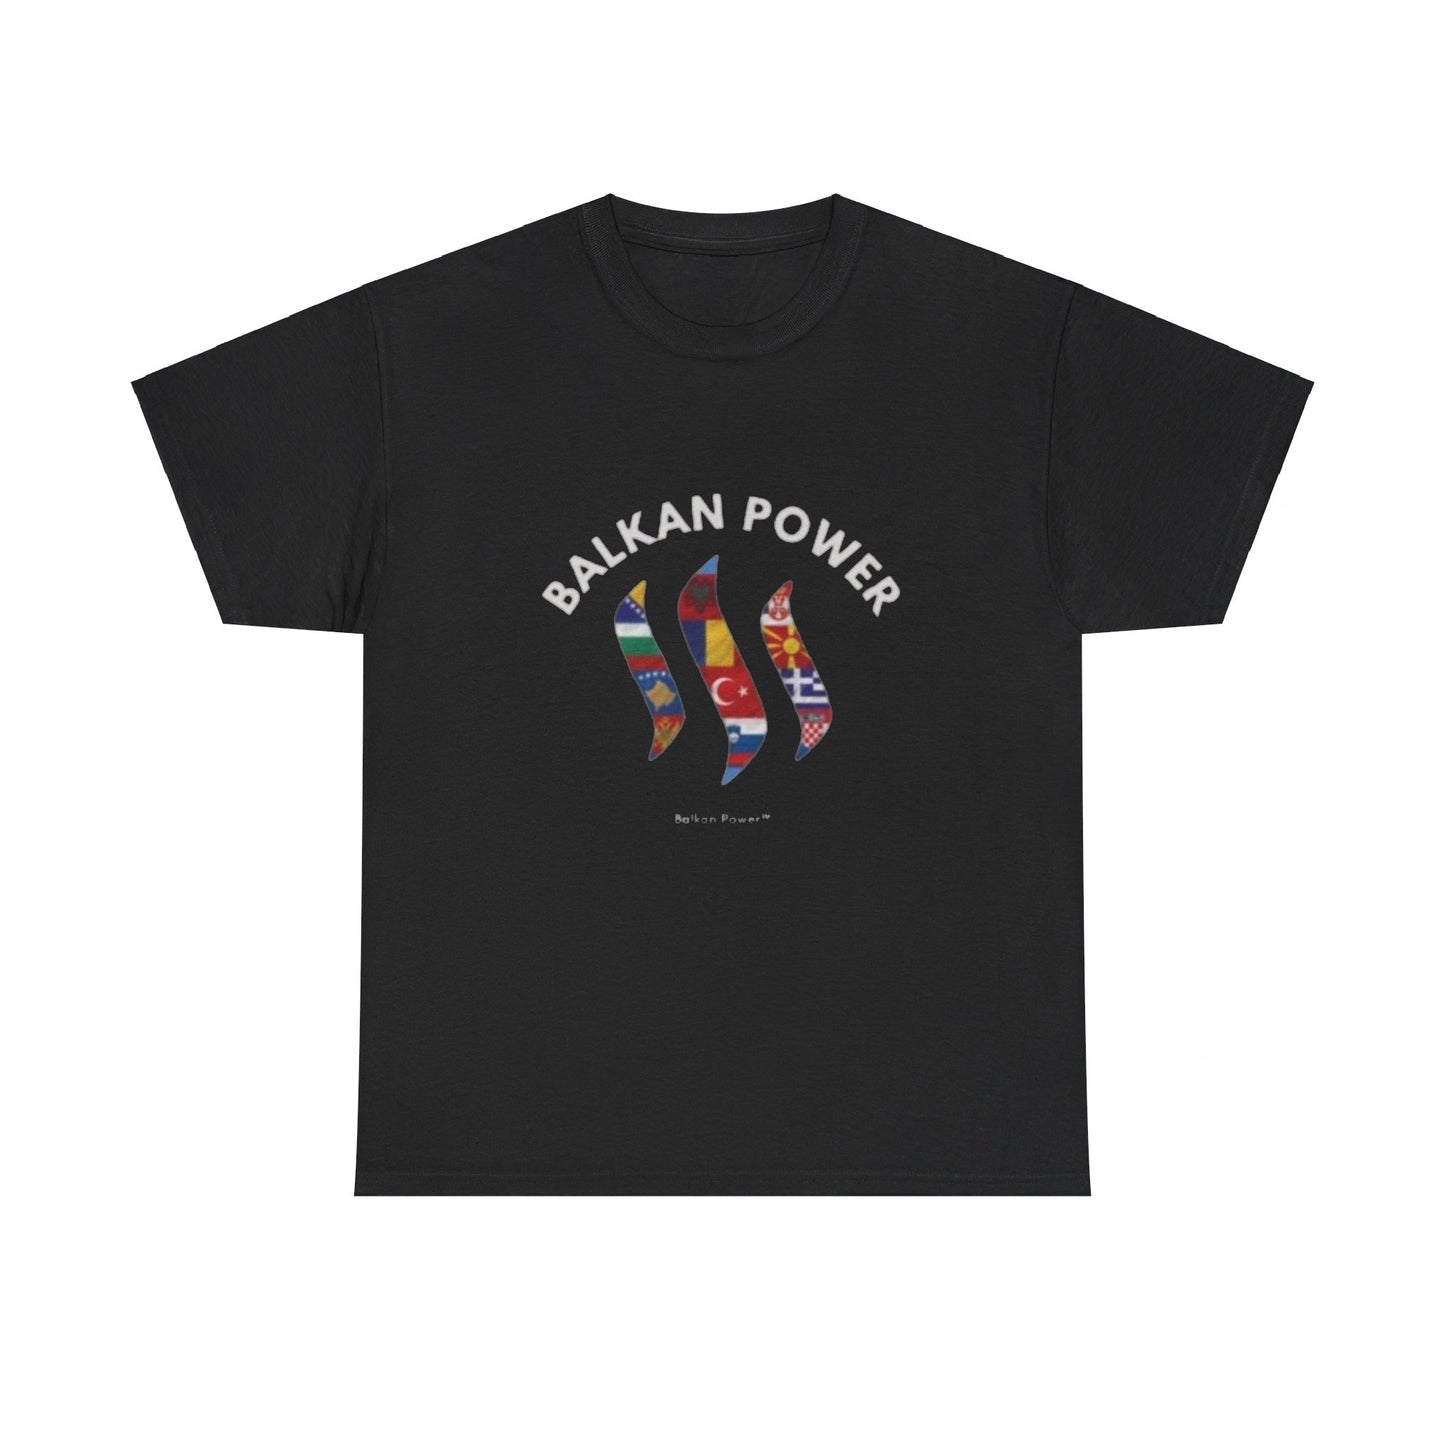 Albania Shirt